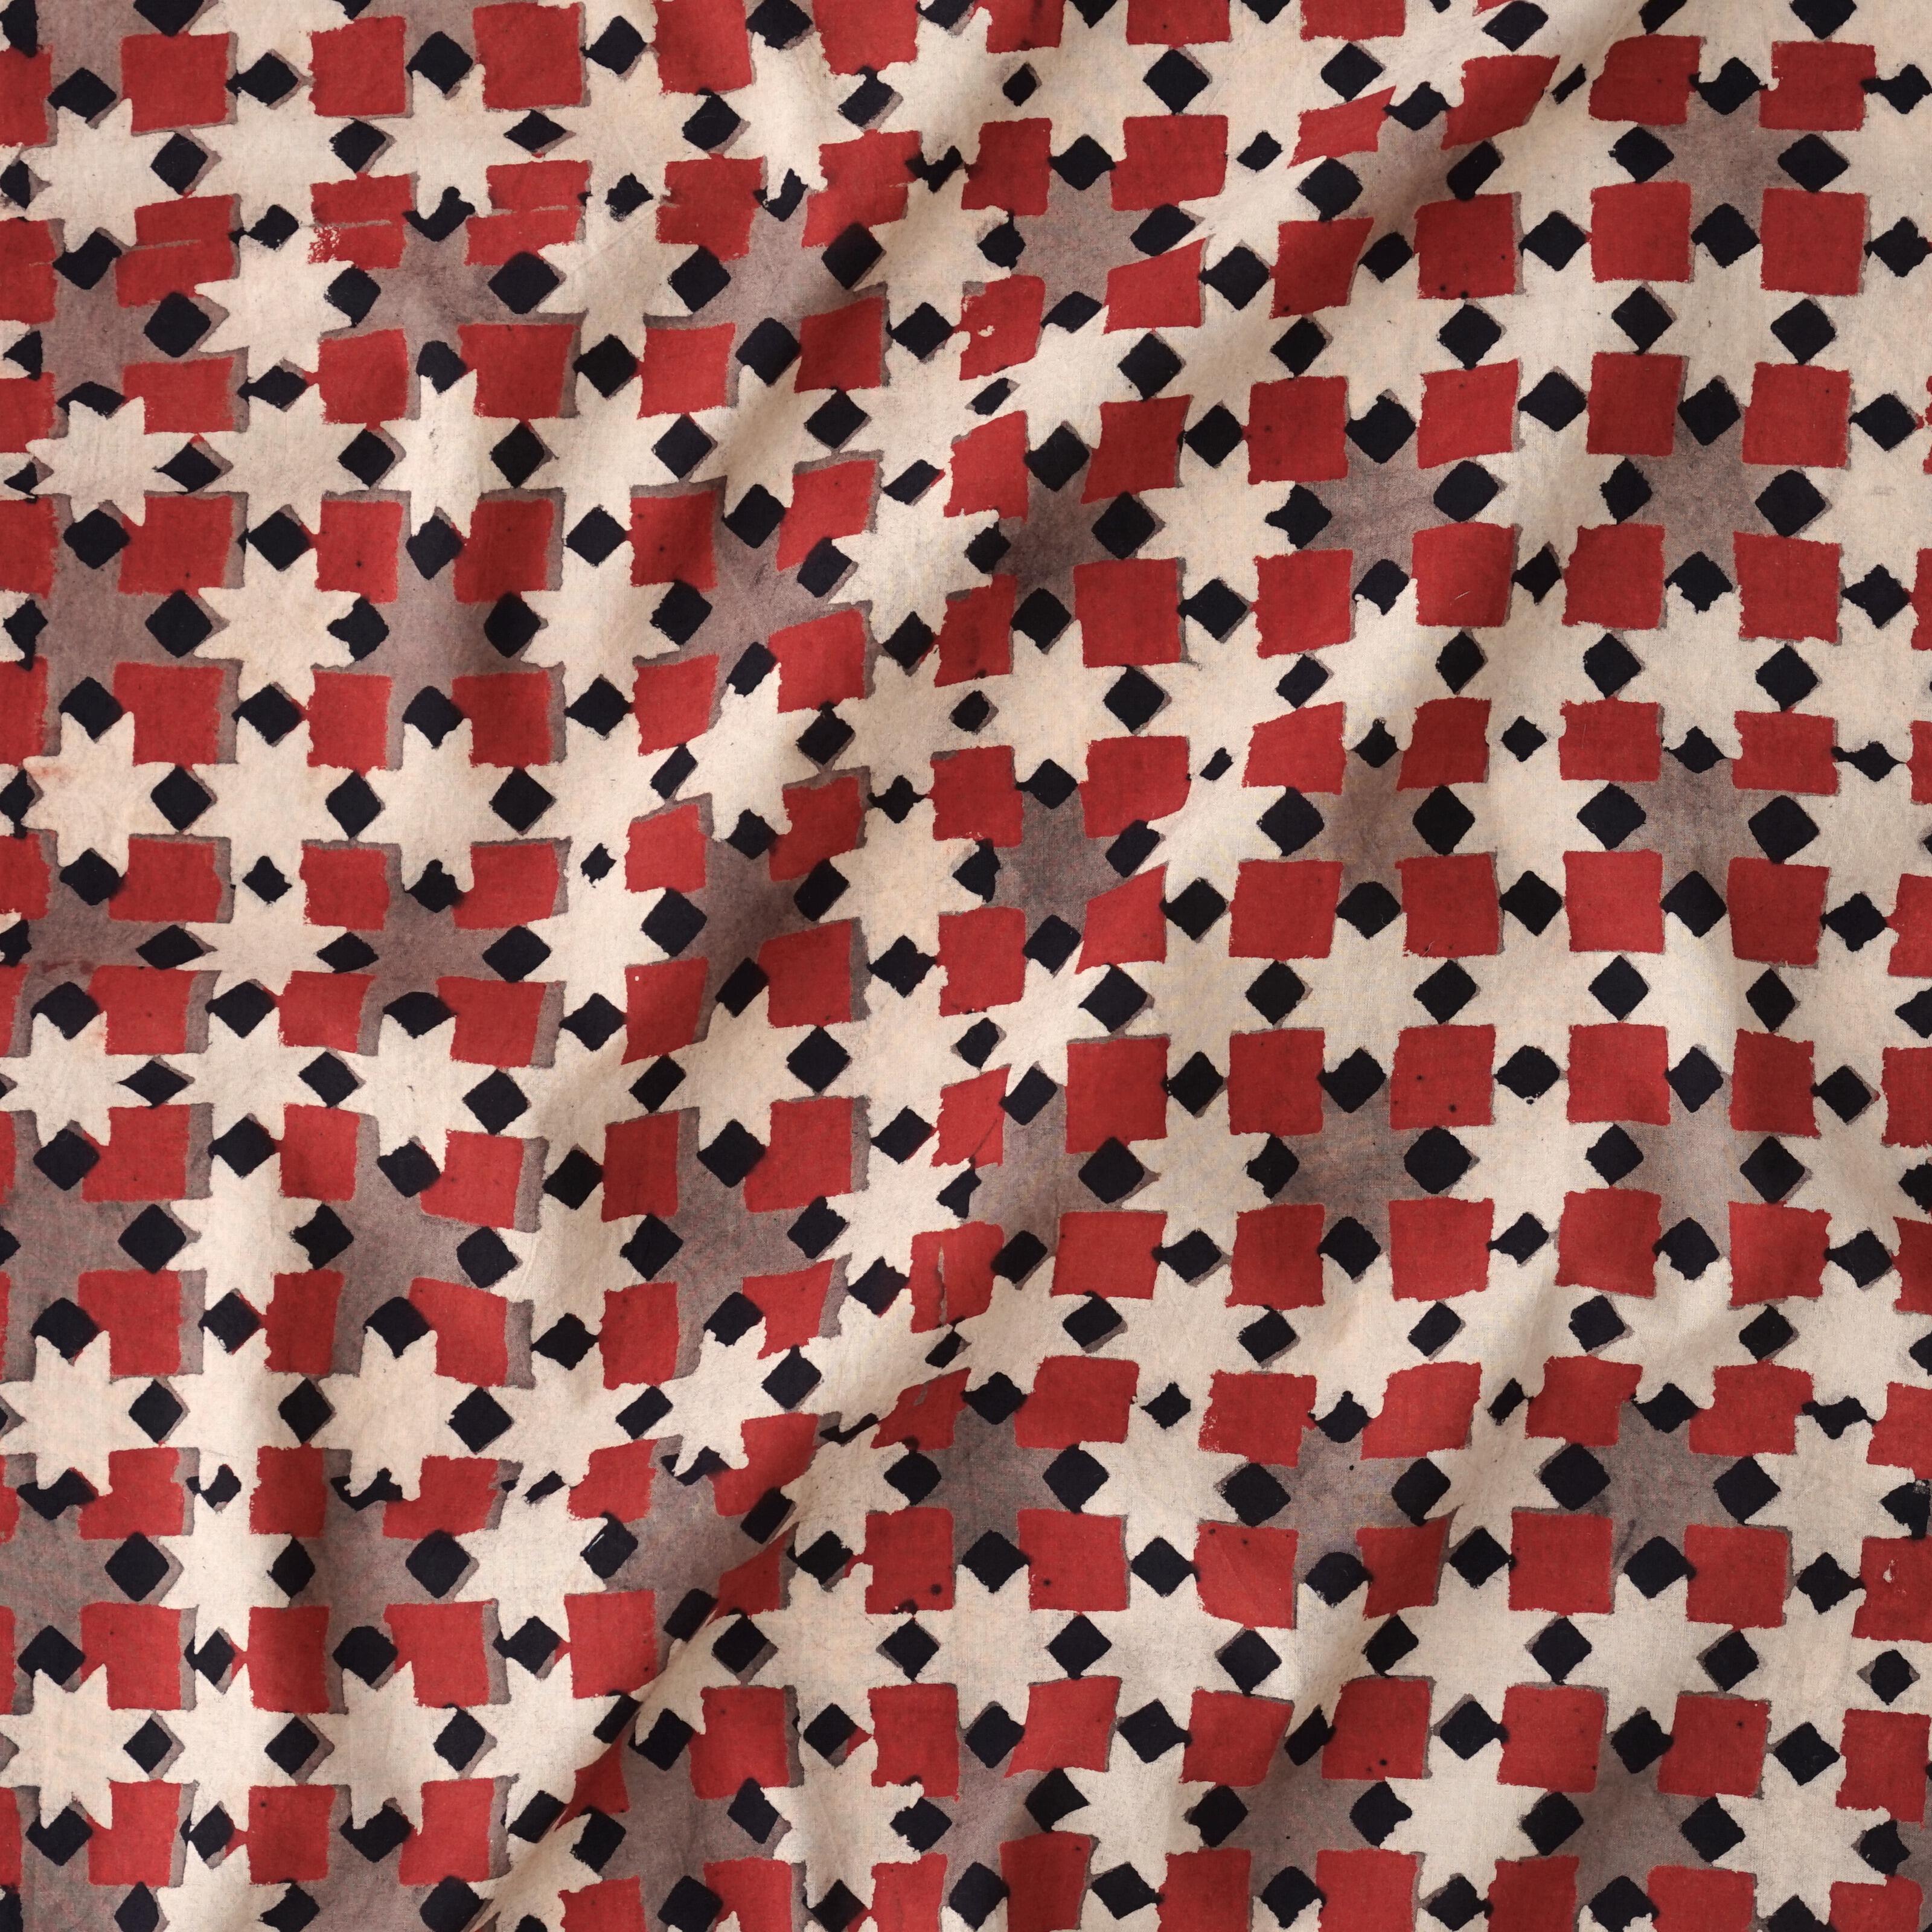 Block Printed Fabric, 100% Cotton, Ajrak Design: Pink Base, Black, Madder Root Red, Purple Square. Contrast